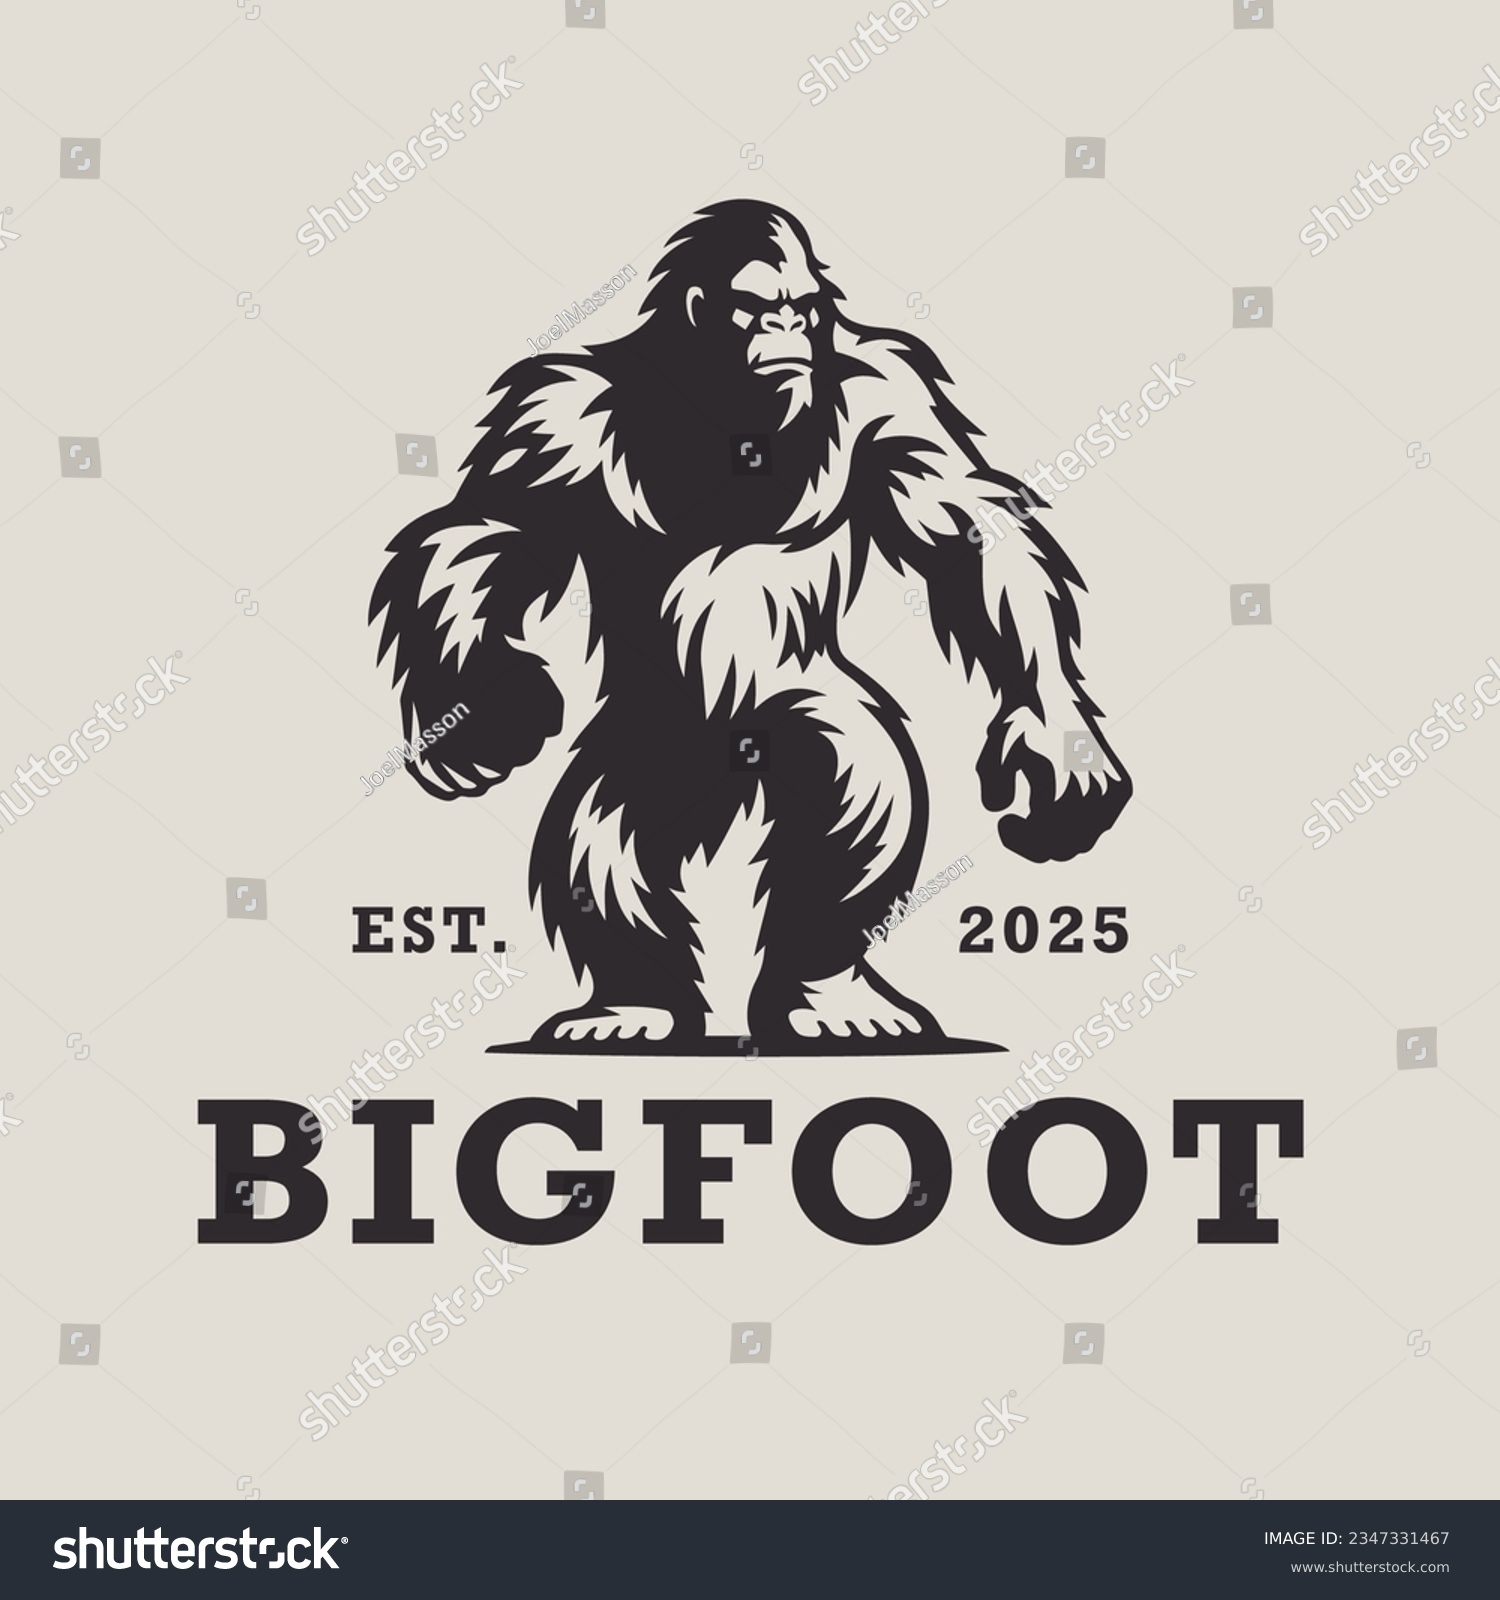 SVG of Bigfoot logo design. Sasquatch brand icon. Yeti symbol. Wood ape emblem. Mythical cryptid creature vector illustration. svg